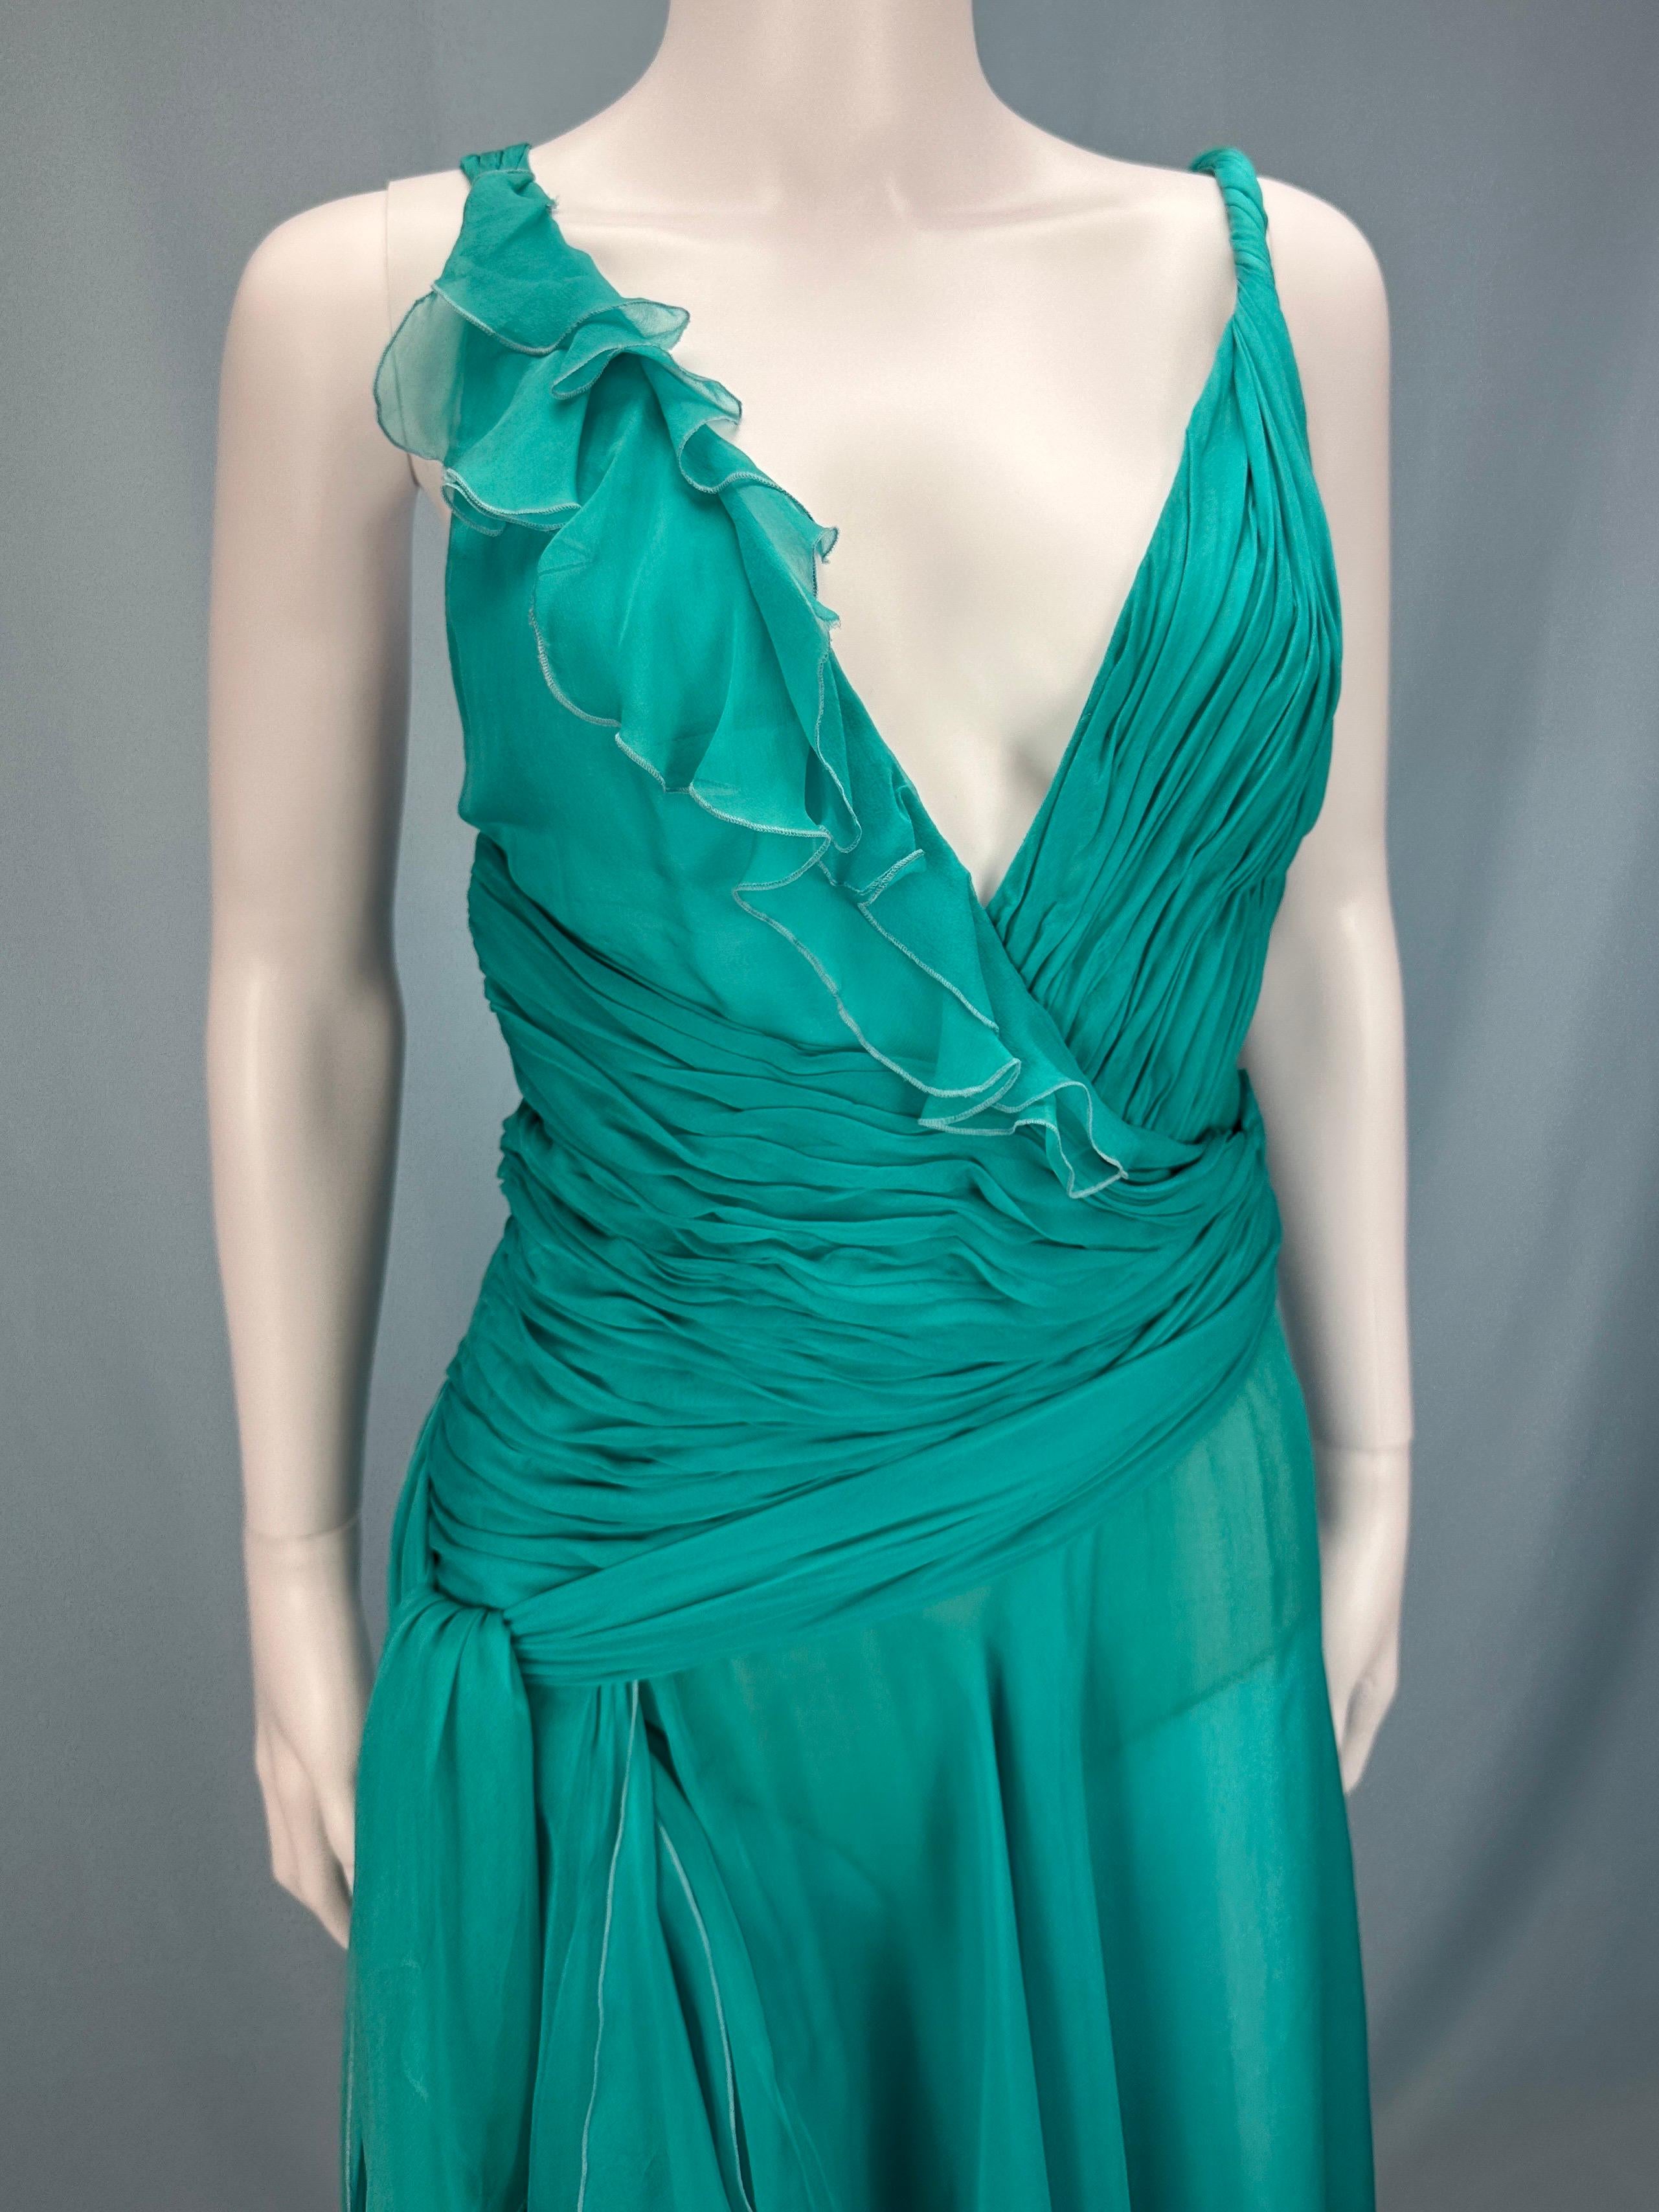 Versace Spring 2004 Teal Silk Chiffon Dress For Sale 2